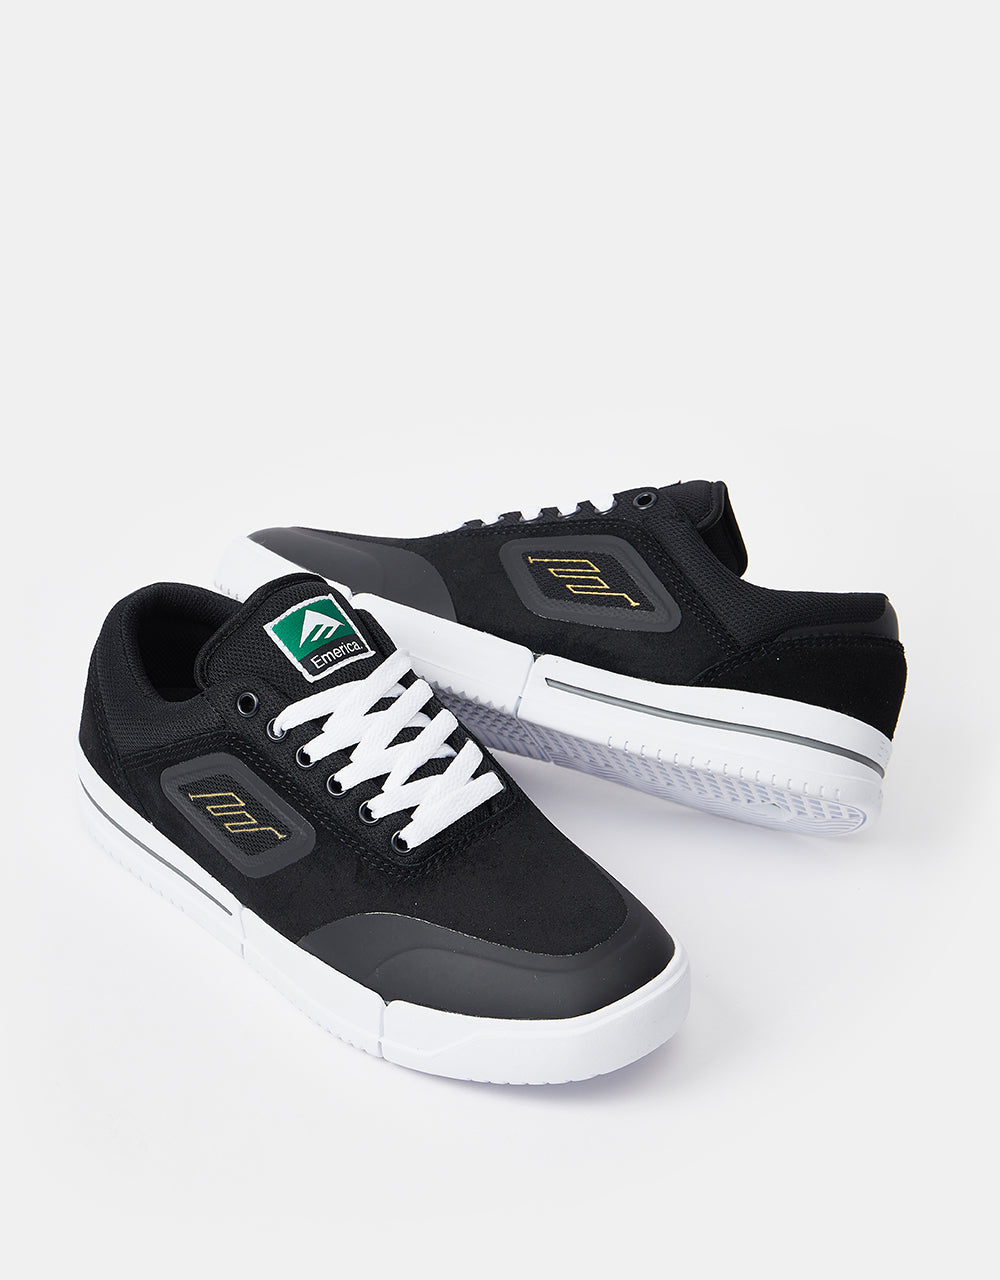 Emerica Phocus G6 Skate Shoes - Black/White/Gold